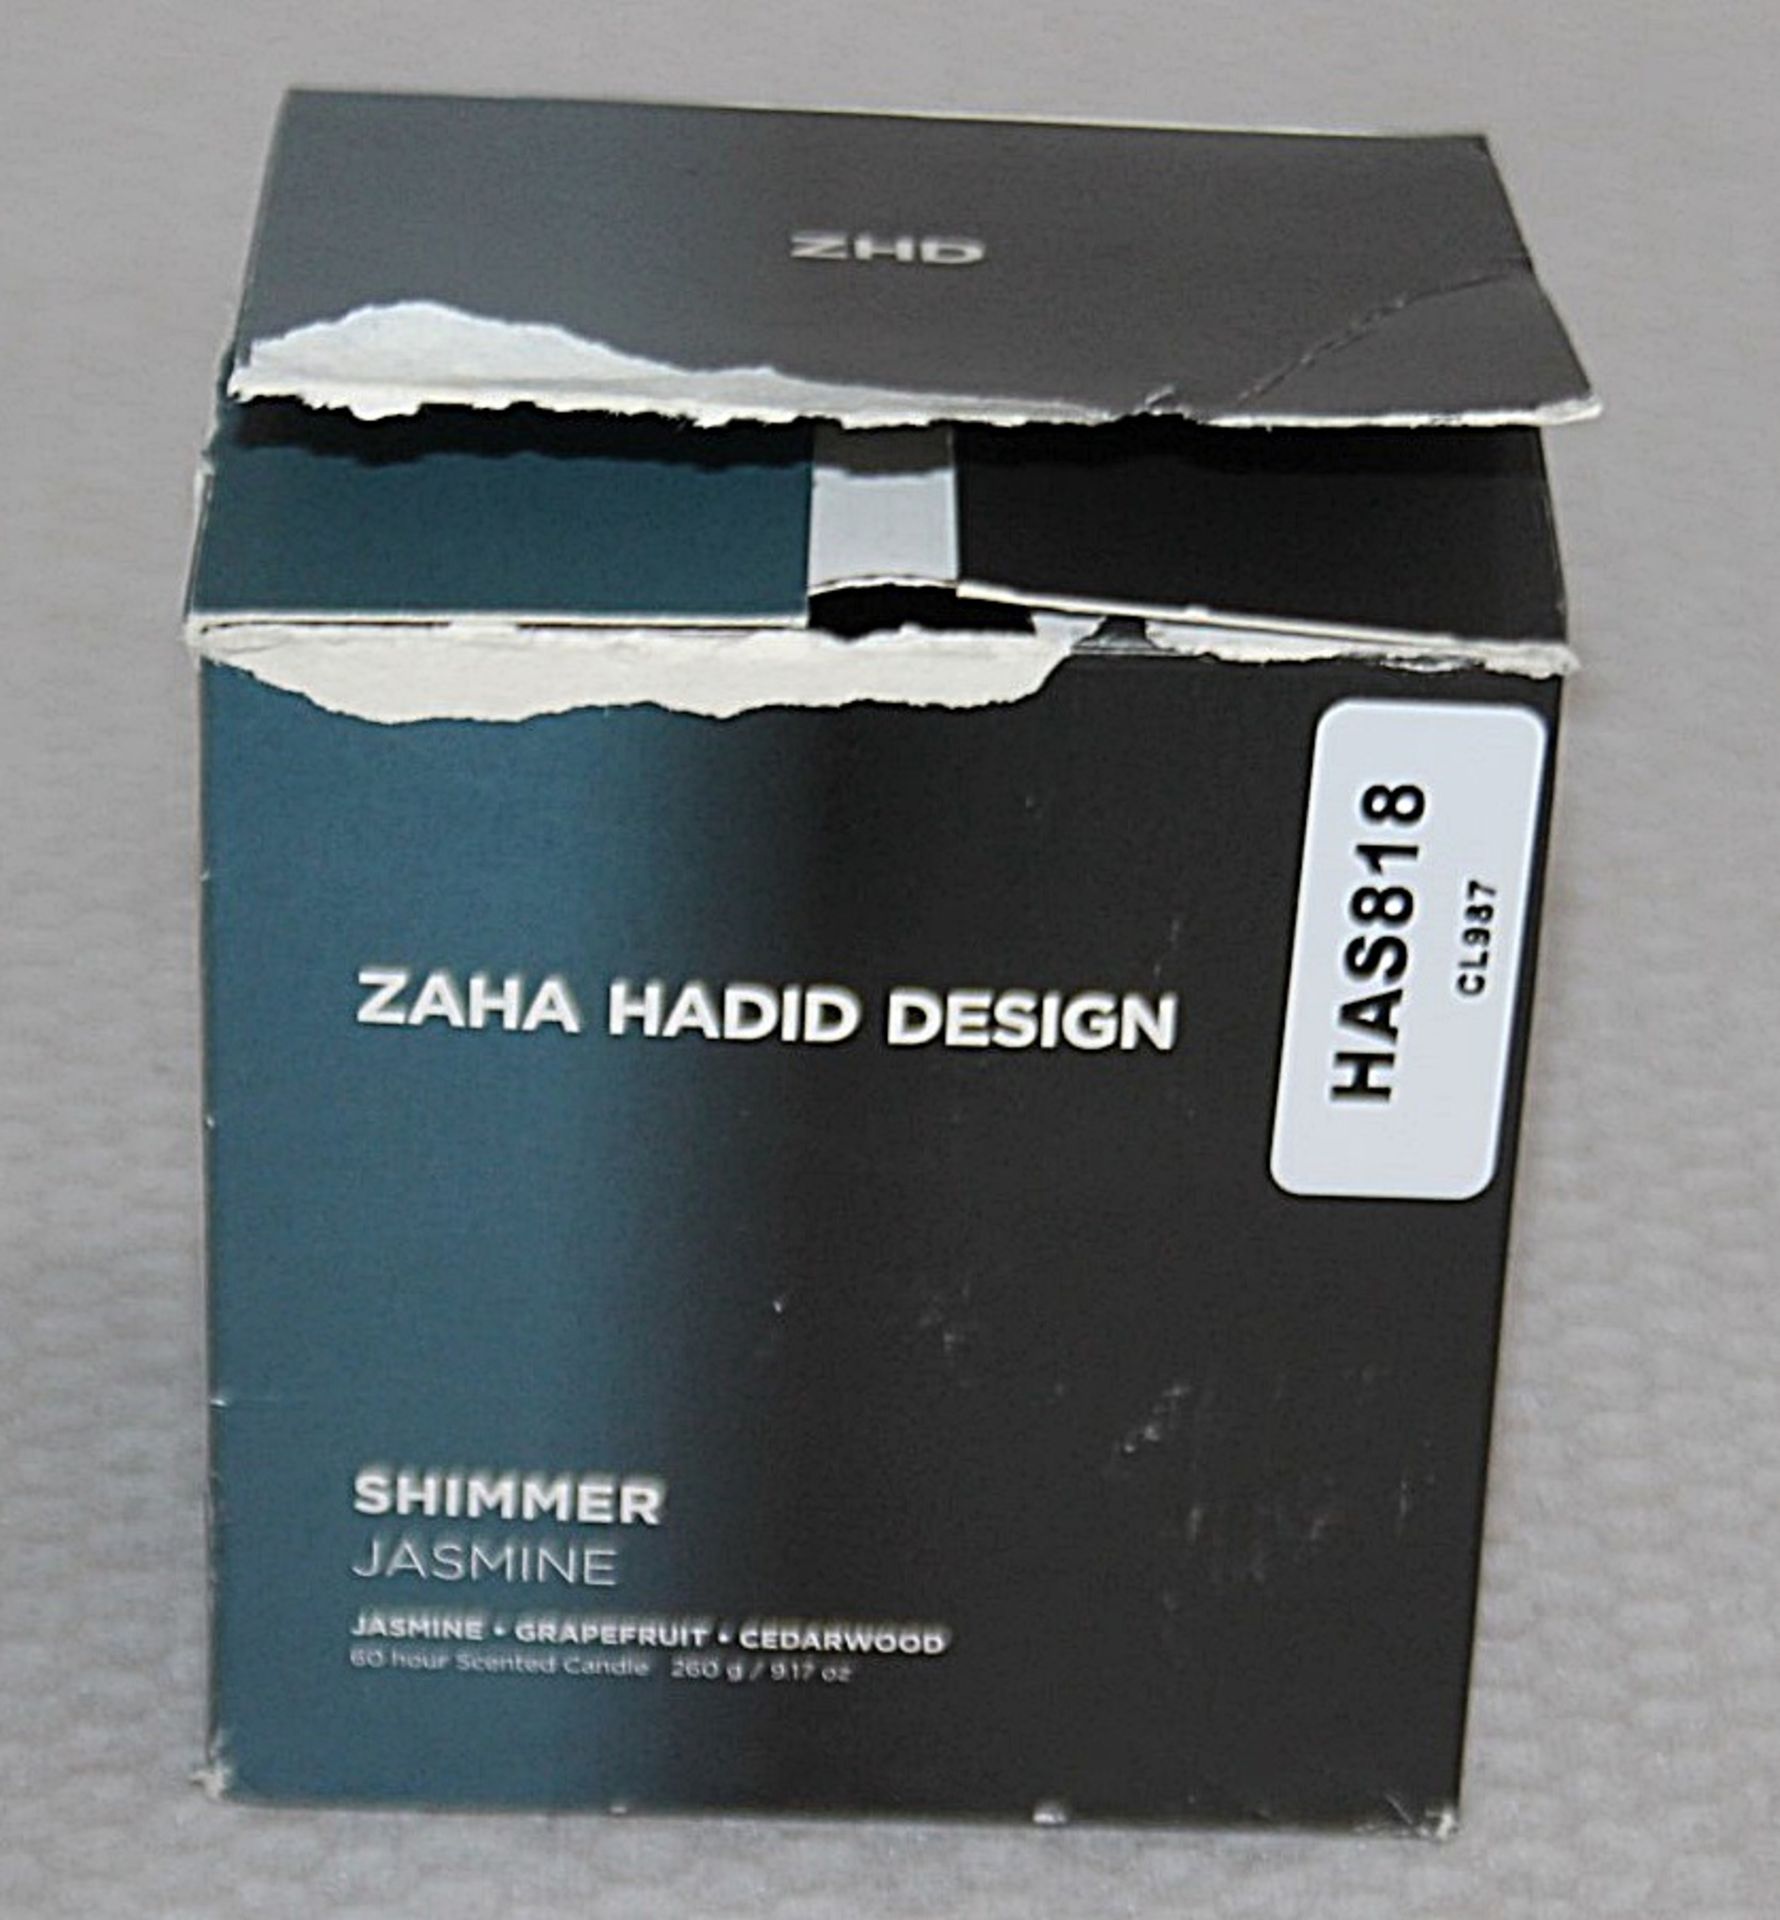 1 x ZAHA HADID DESIGN Shimmer Jasmine Scented Candle (260g) - Original Price £155.00 - Image 8 of 8